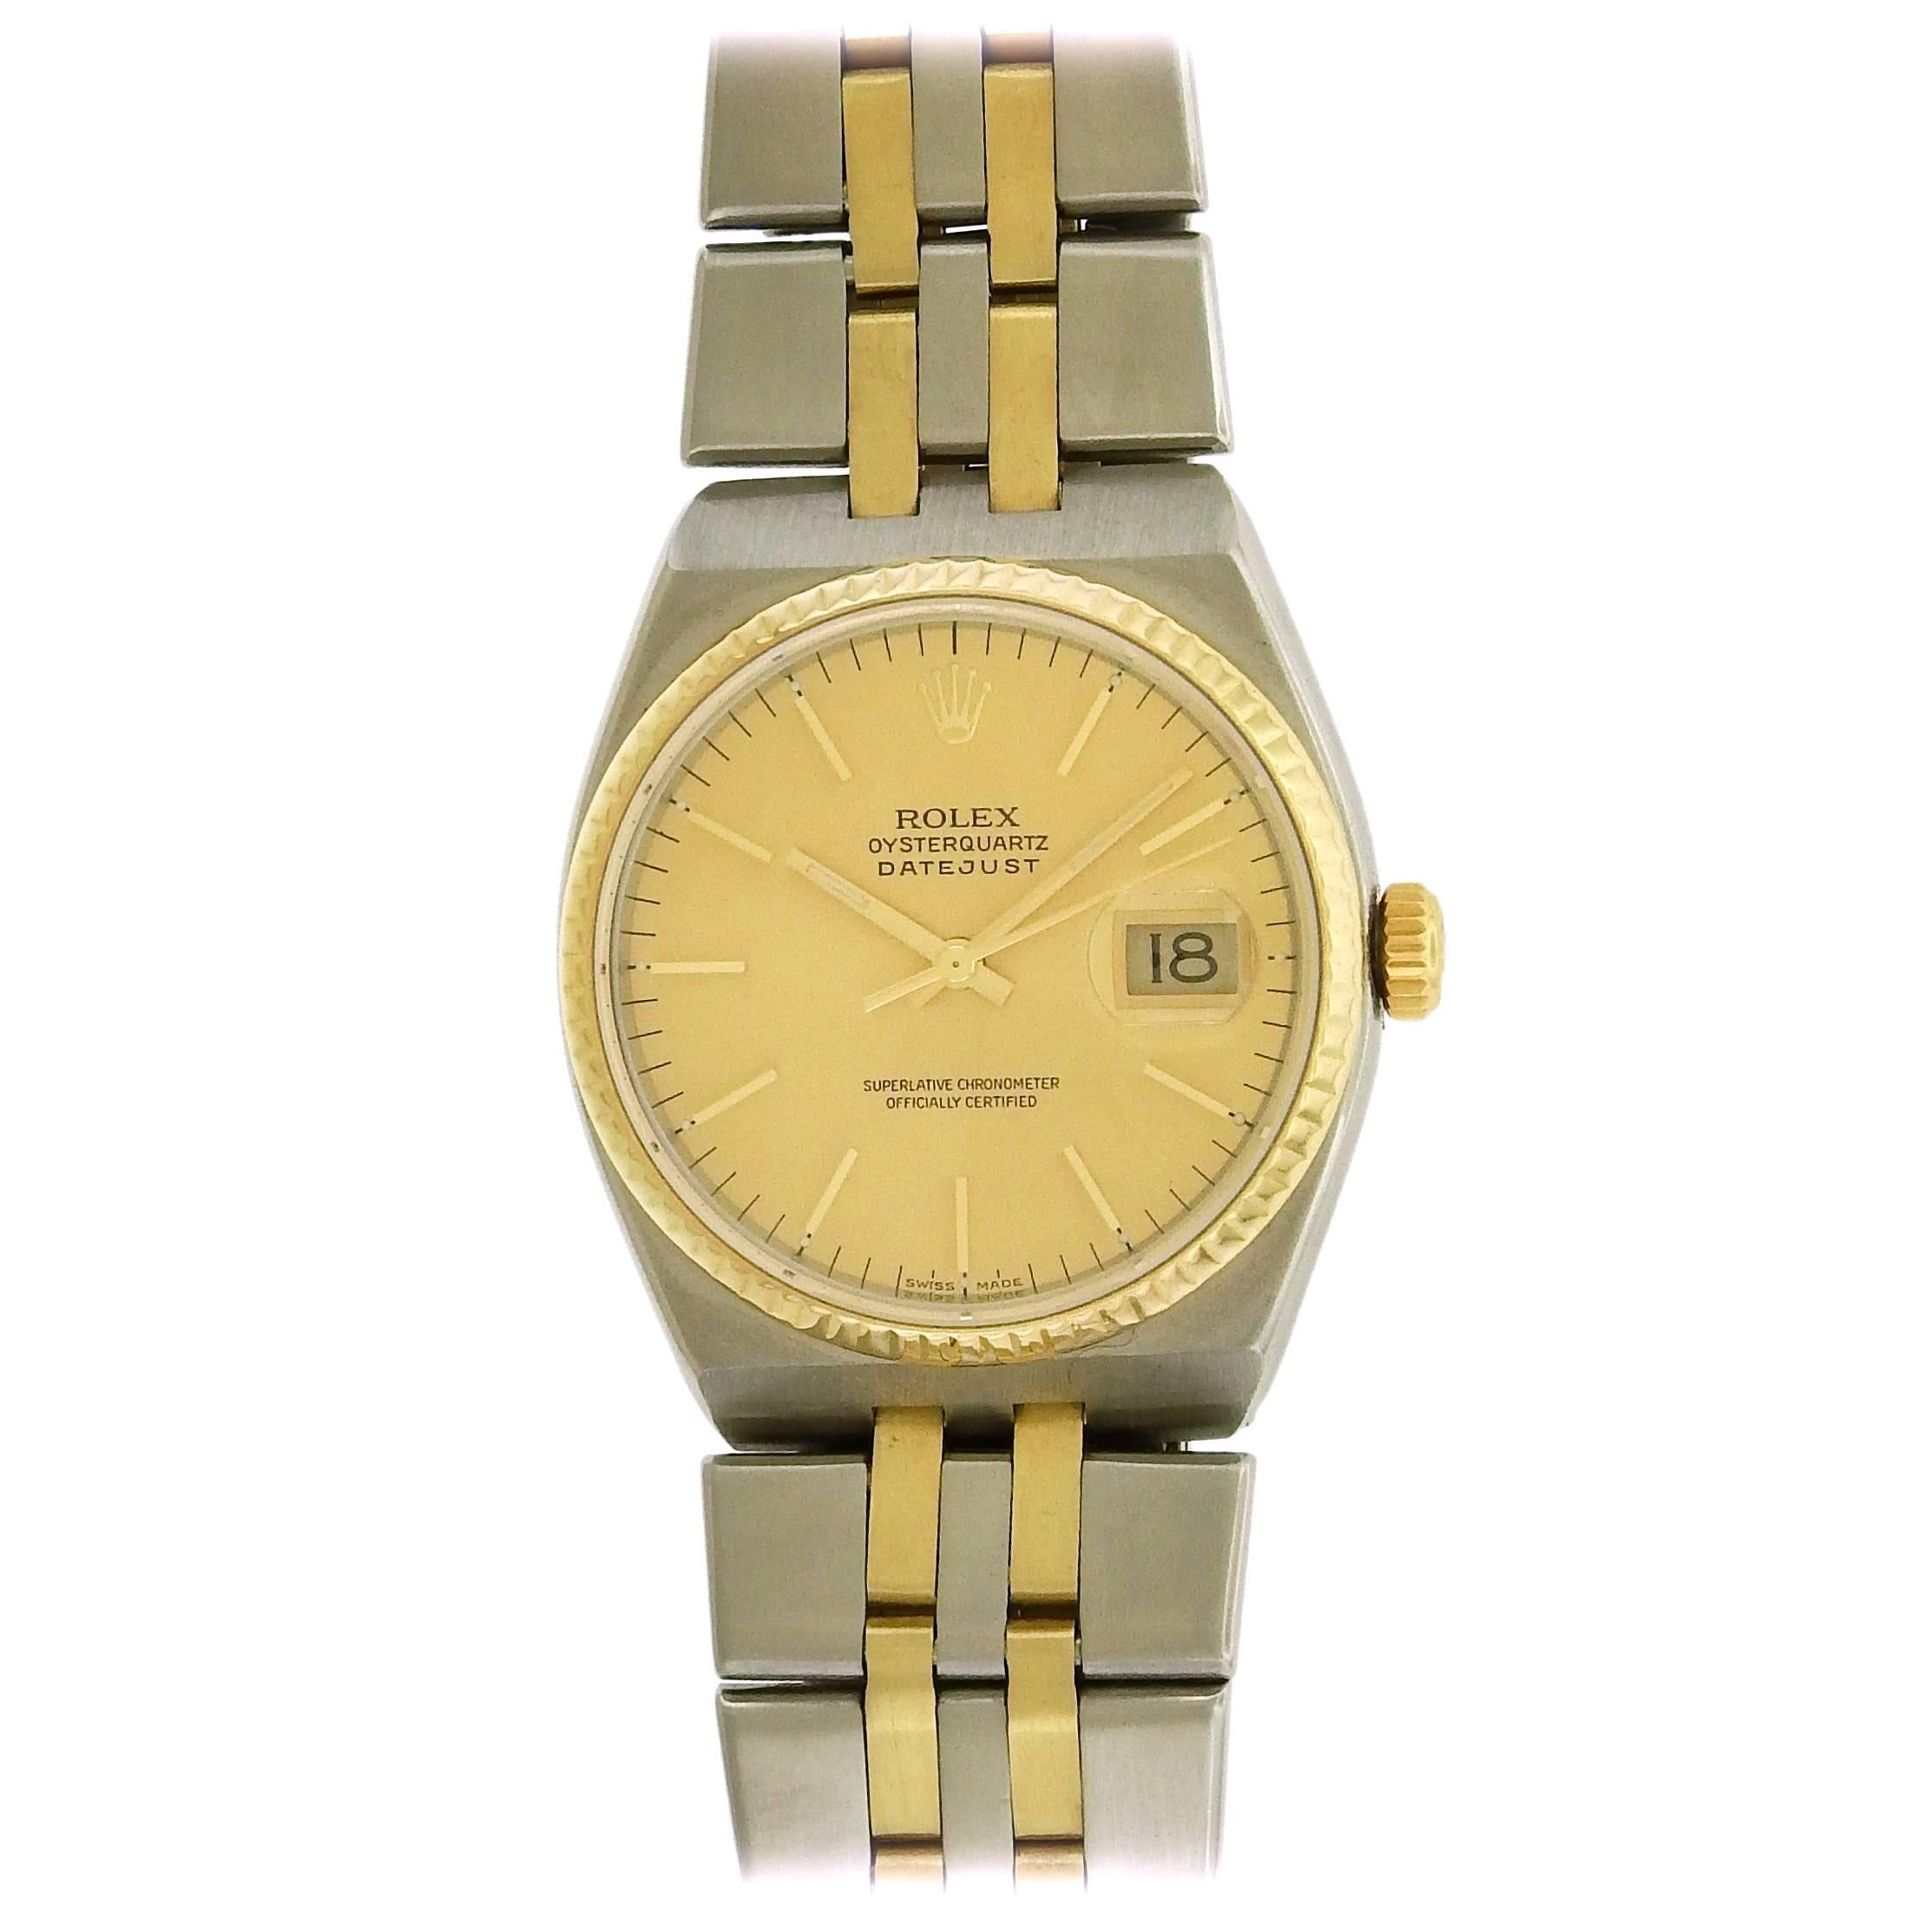 Rolex Stainless Steel Yellow Gold Oysterquartz Quartz Wristwatch Model 7013 1